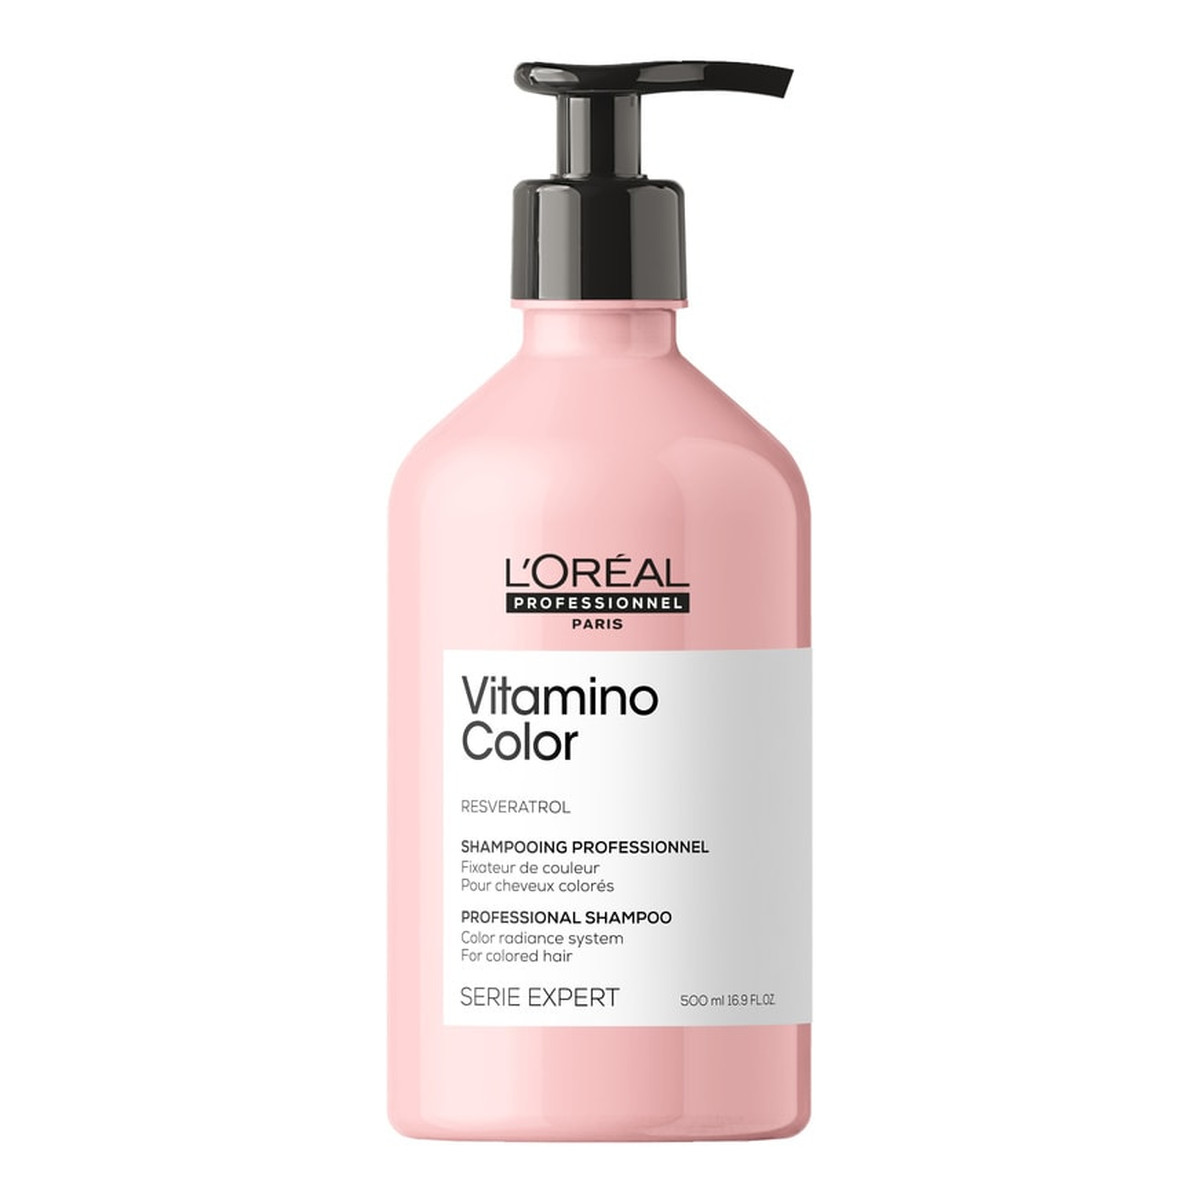 L'Oreal Paris Serie expert vitamino color shampoo szampon do włosów koloryzowanych 500ml